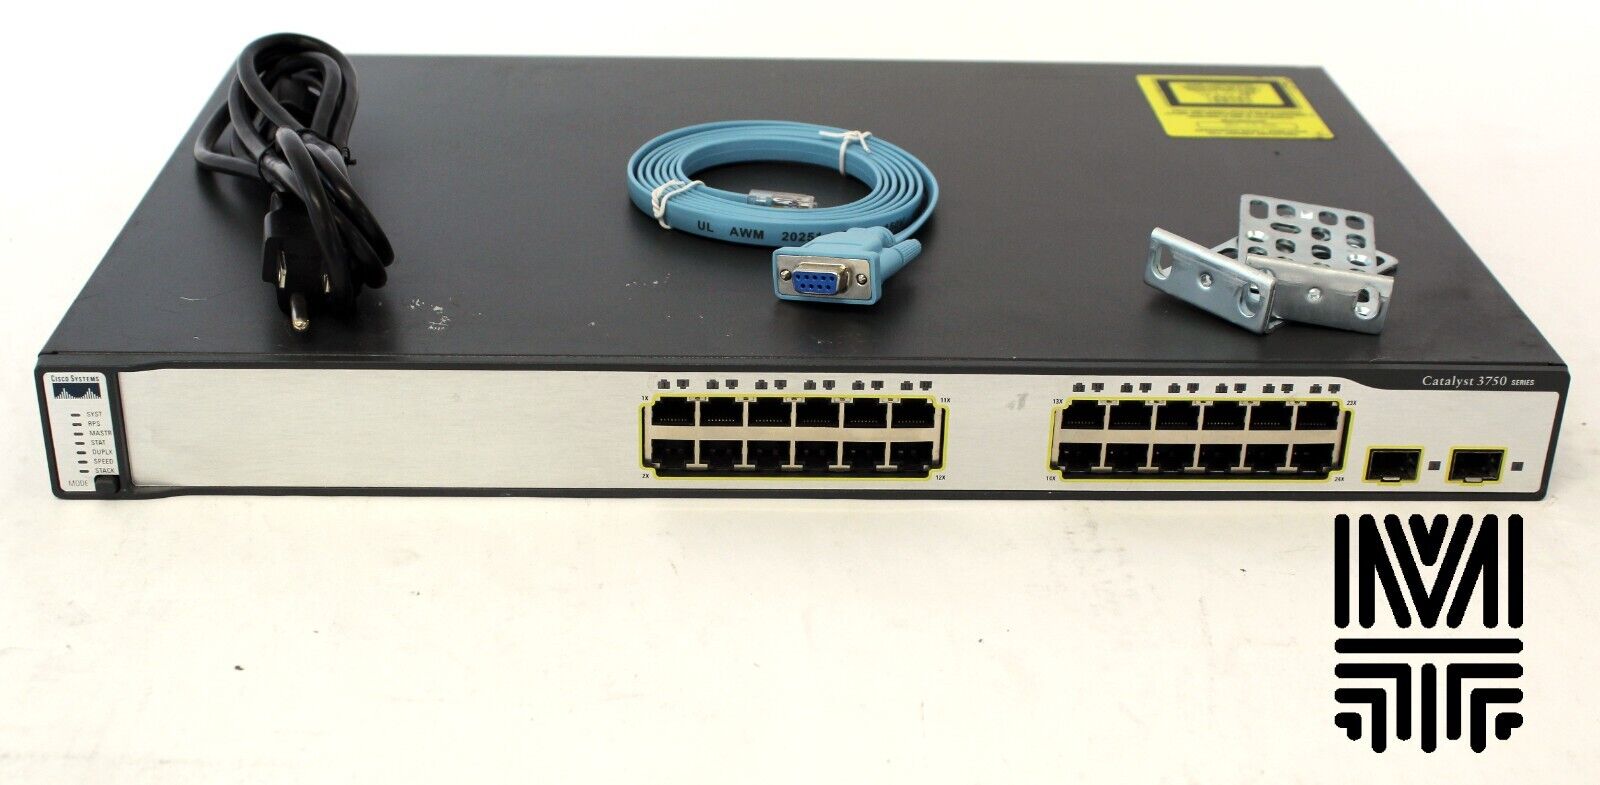 Cisco WS-C3750-24TS-E Catalyst 3750 Switch 24-Port 10/100 + 2 SFP + IPS Image